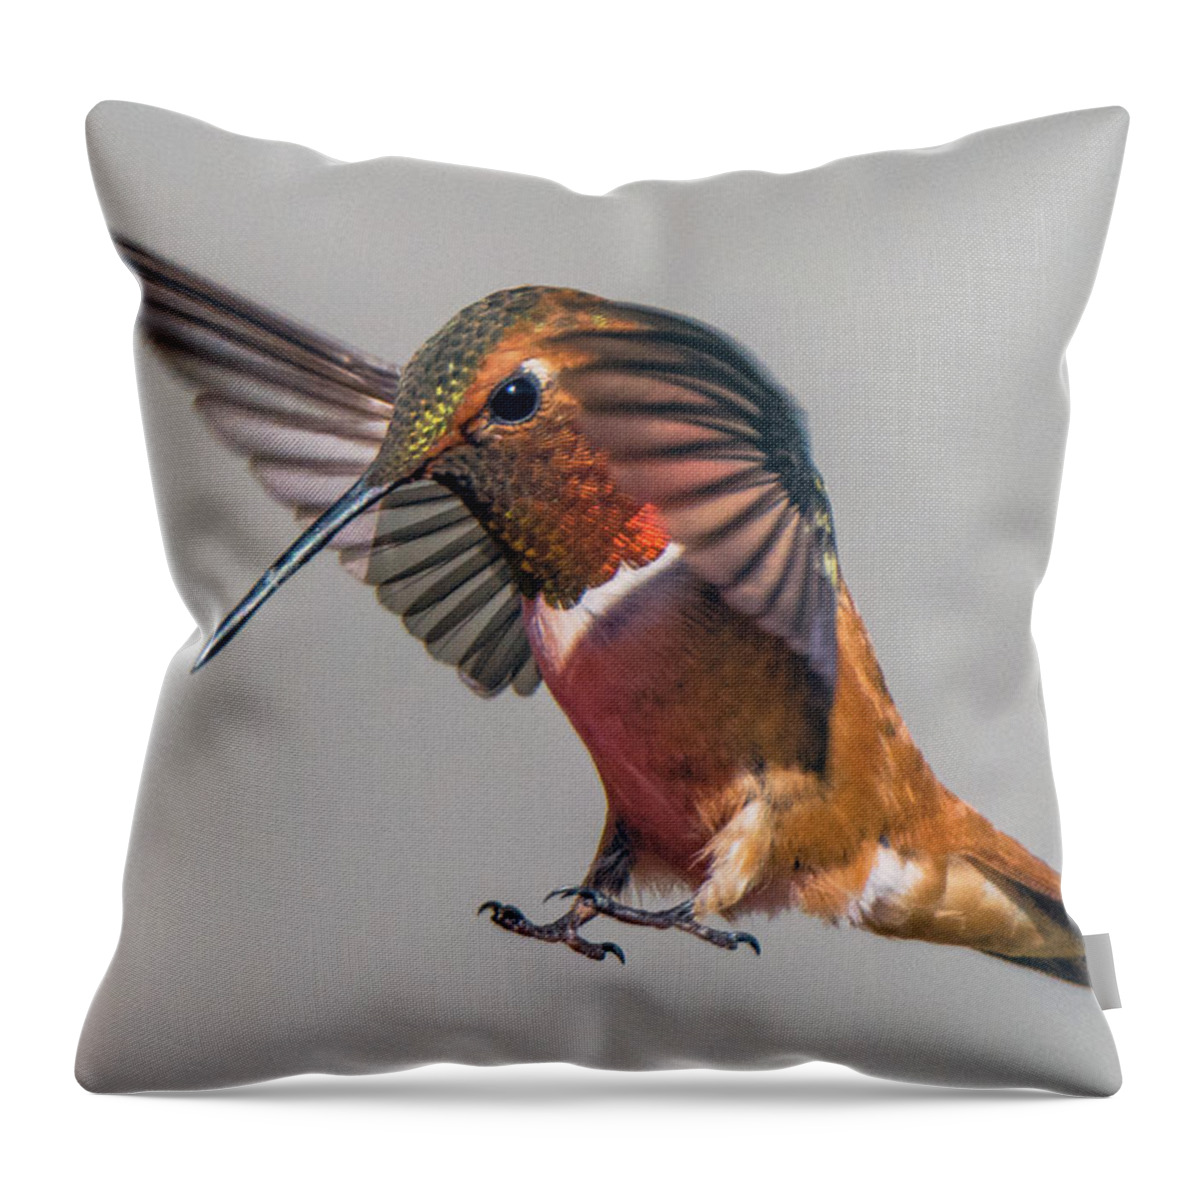 Rufous Throw Pillow featuring the photograph Rufous Male Hummingbird by Stephen Johnson